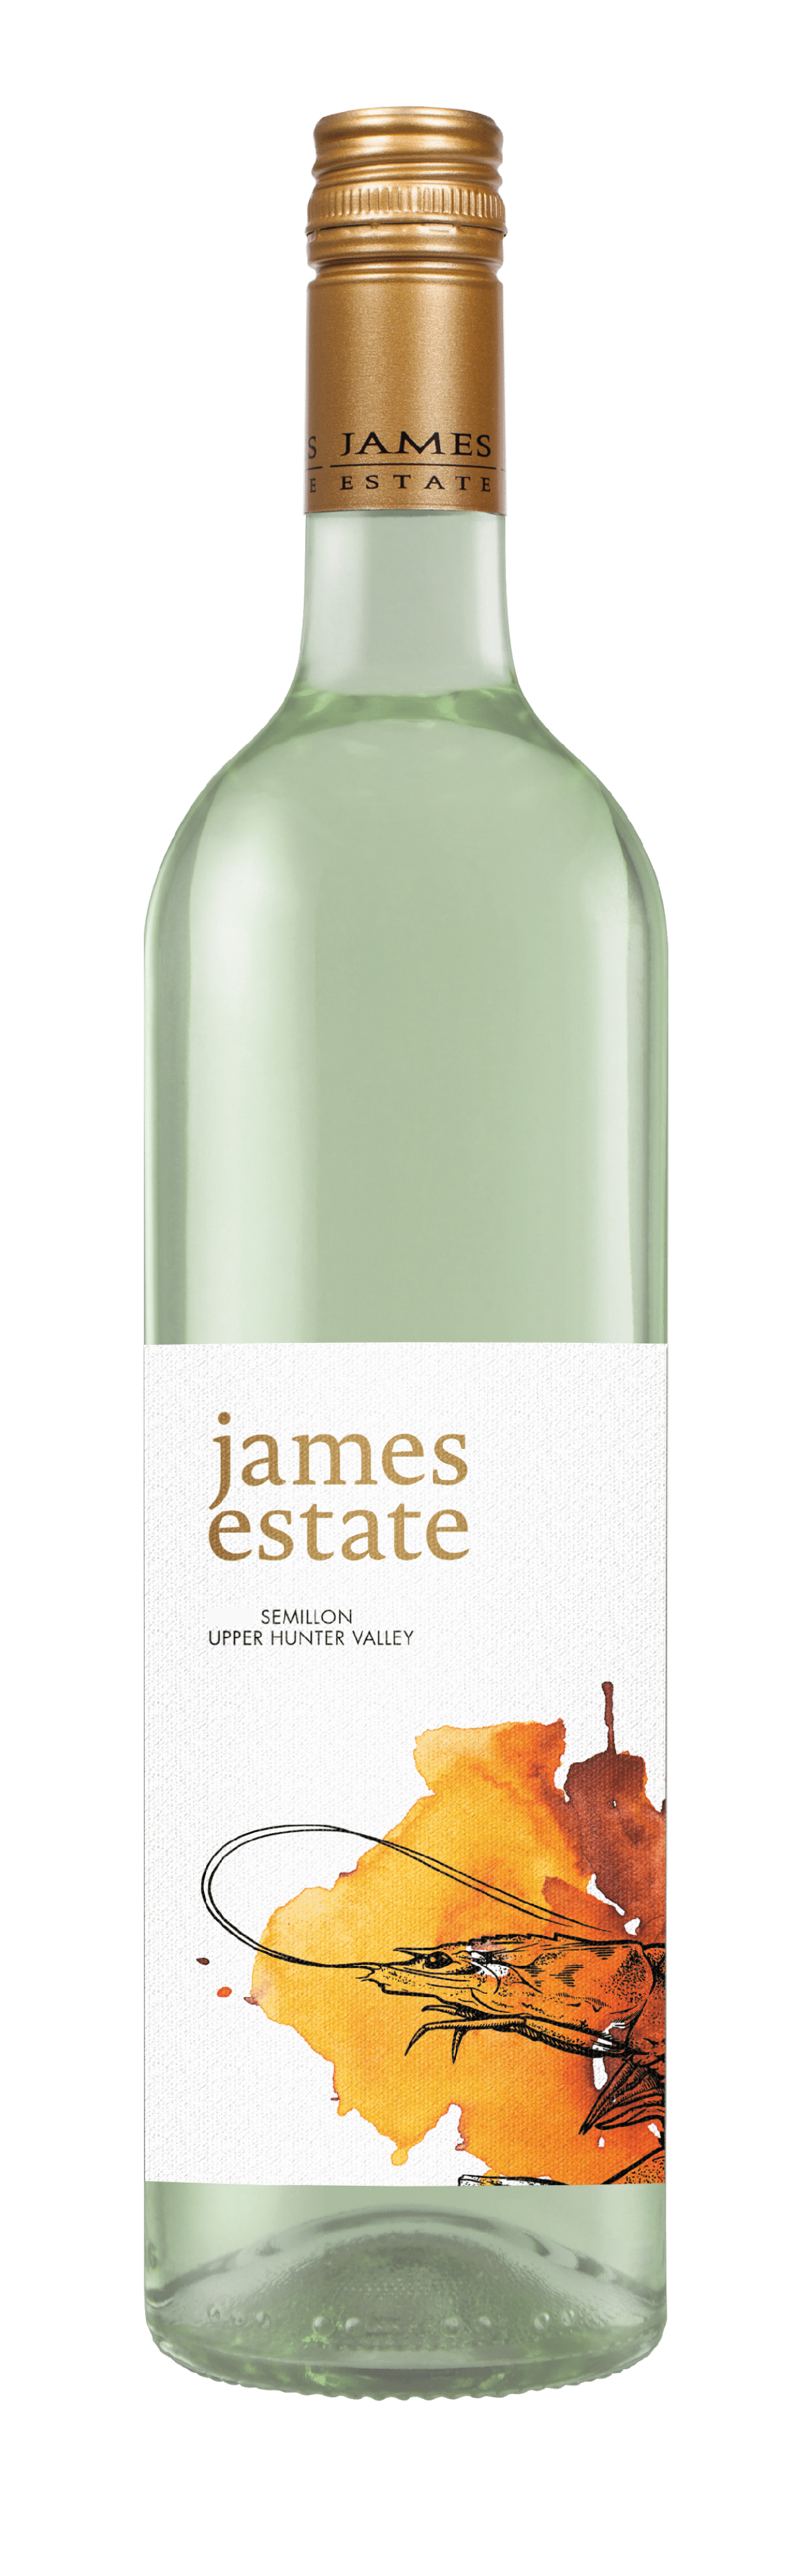 James Estate Single Vineyard Estate 2016 Semillon